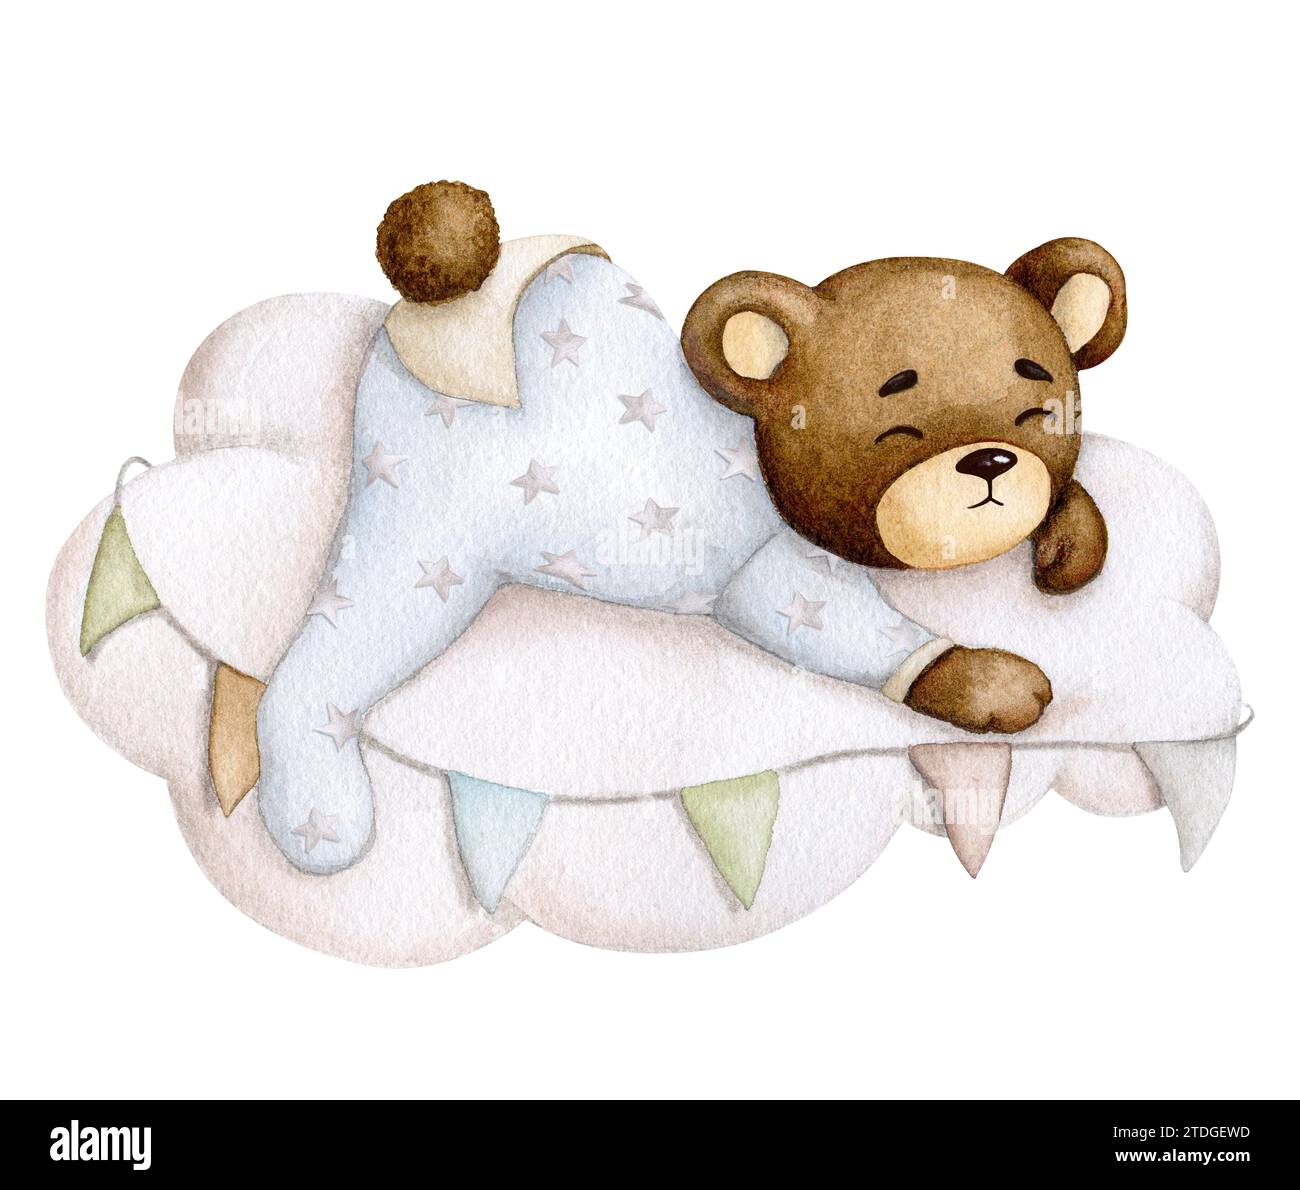 Cool teddy bear sleeping relaxing in pajamas Vector Image